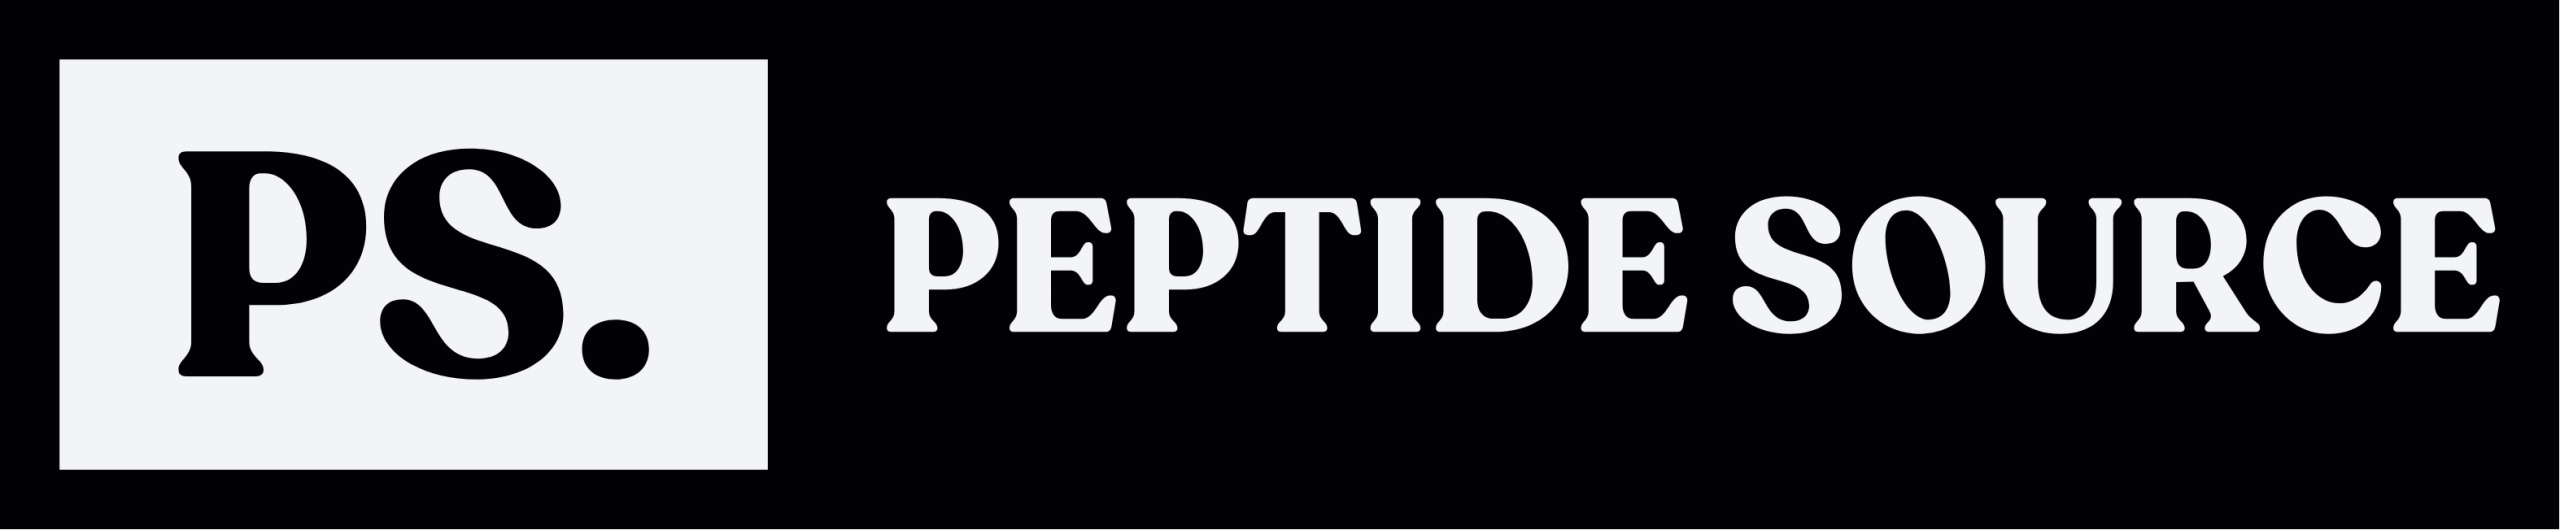 peptide source logo